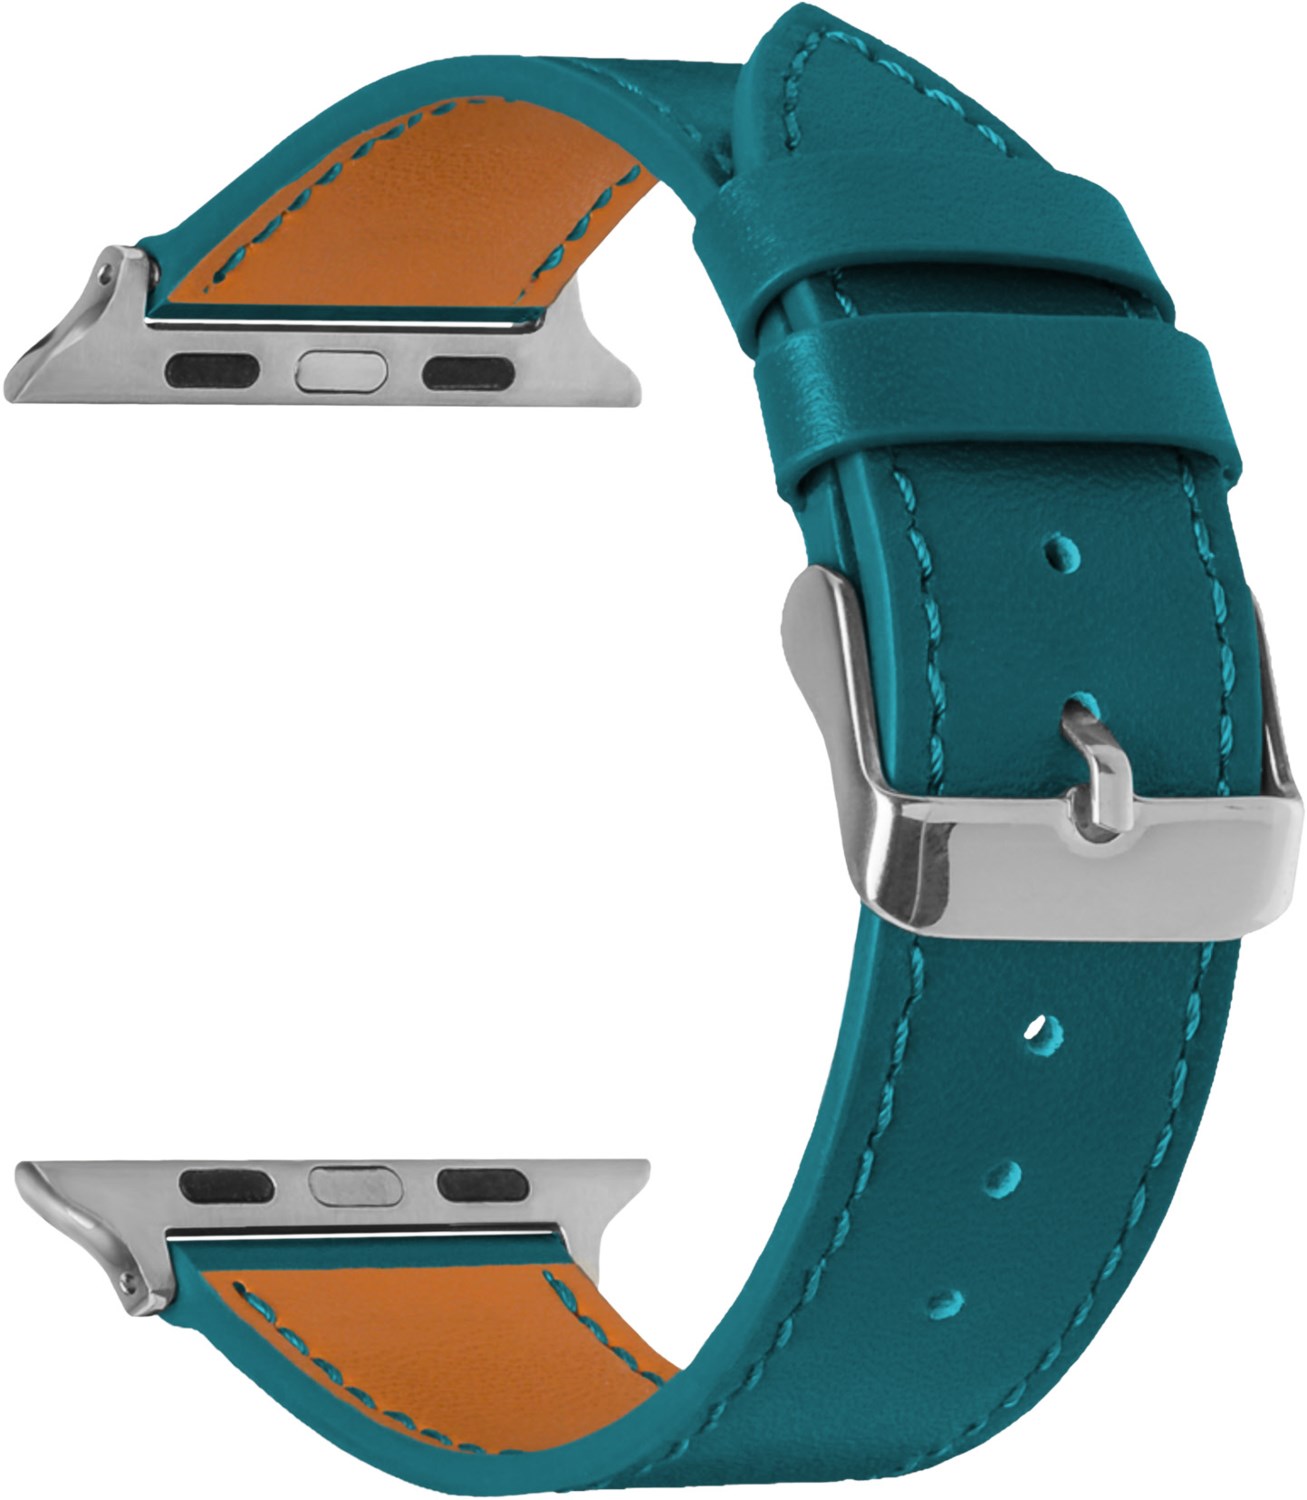 Lederarmband (38/40mm) für Apple Watch Series 3 blau